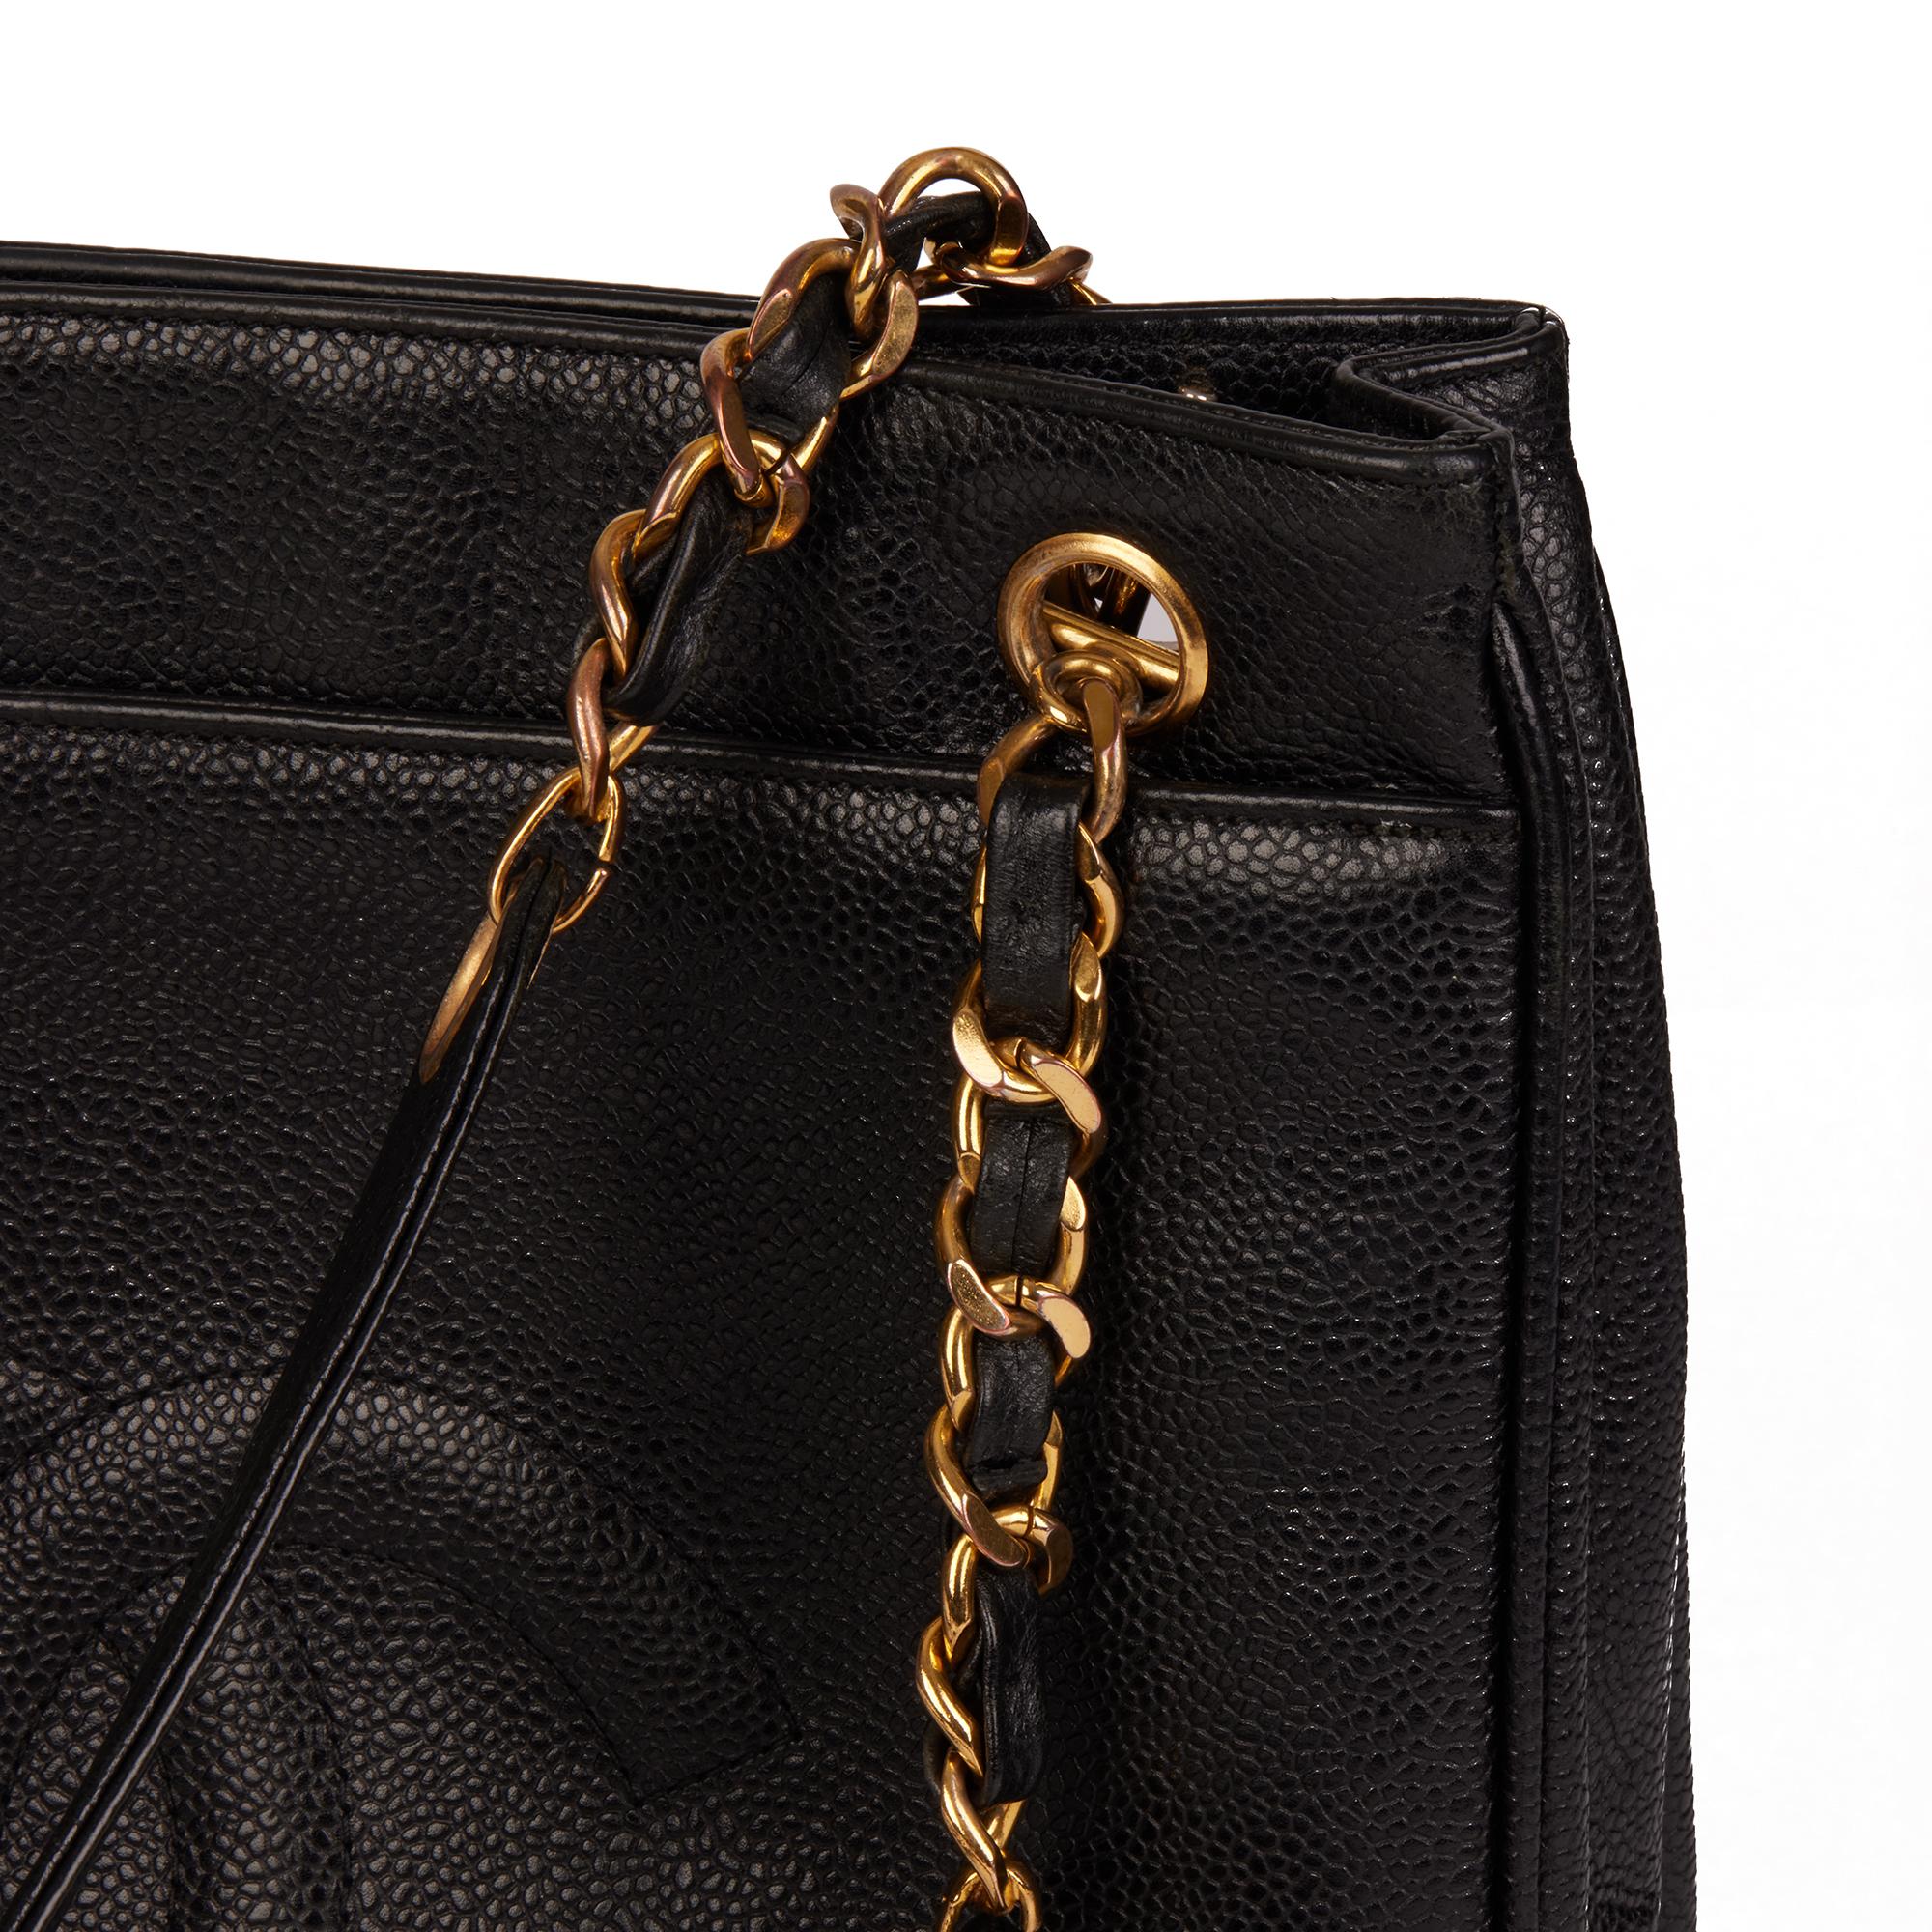 CHANEL Black Caviar Leather Vintage Classic Shoulder Bag 2